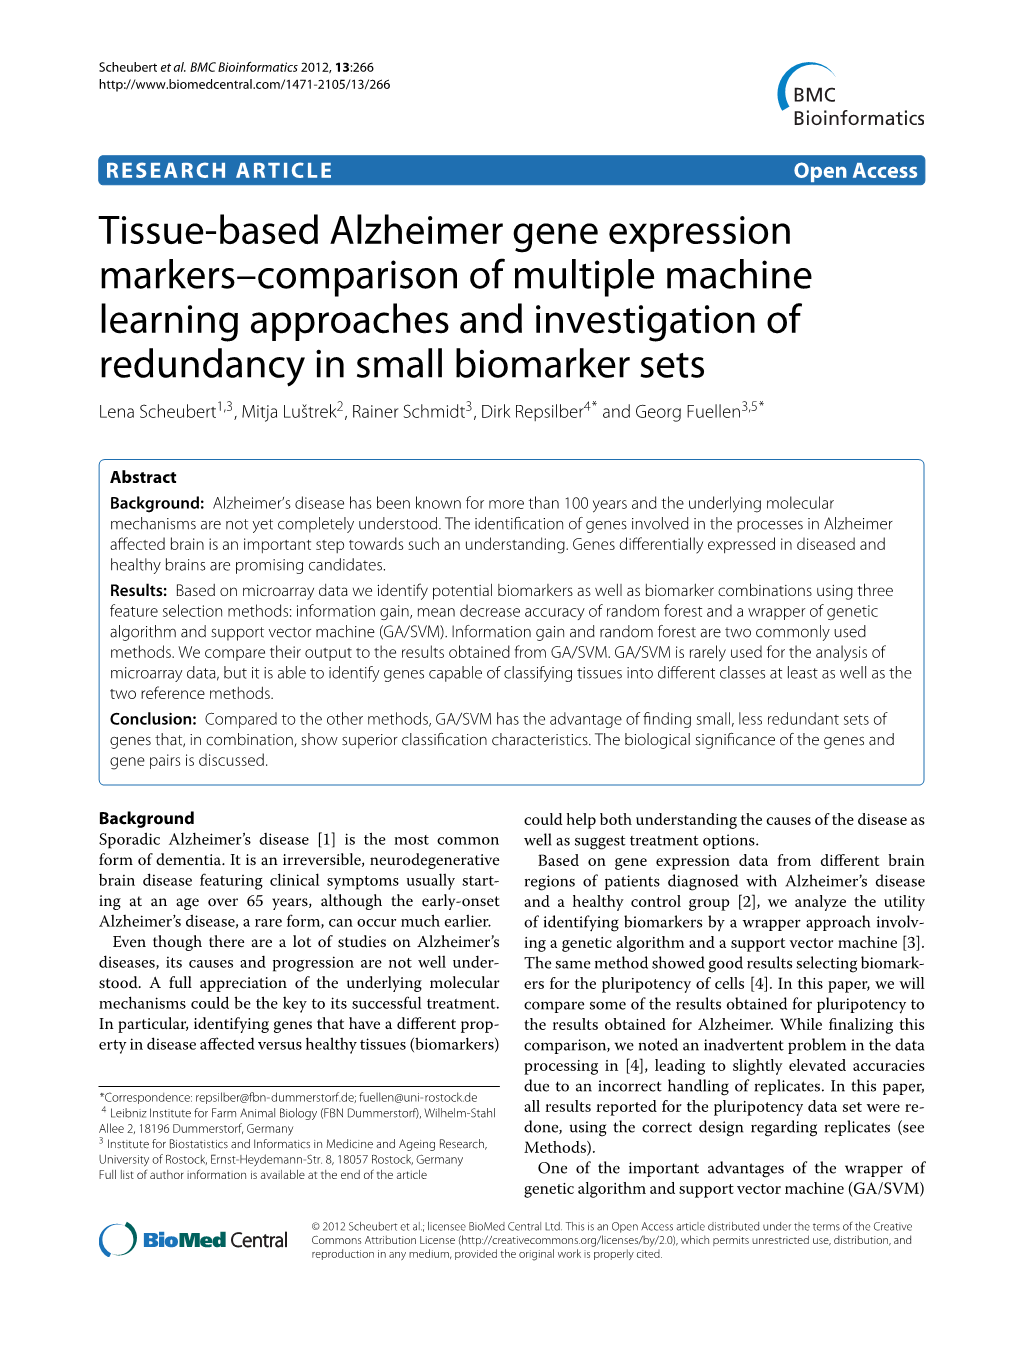 Tissue-Based Alzheimer Gene Expression Markers–Comparison Of